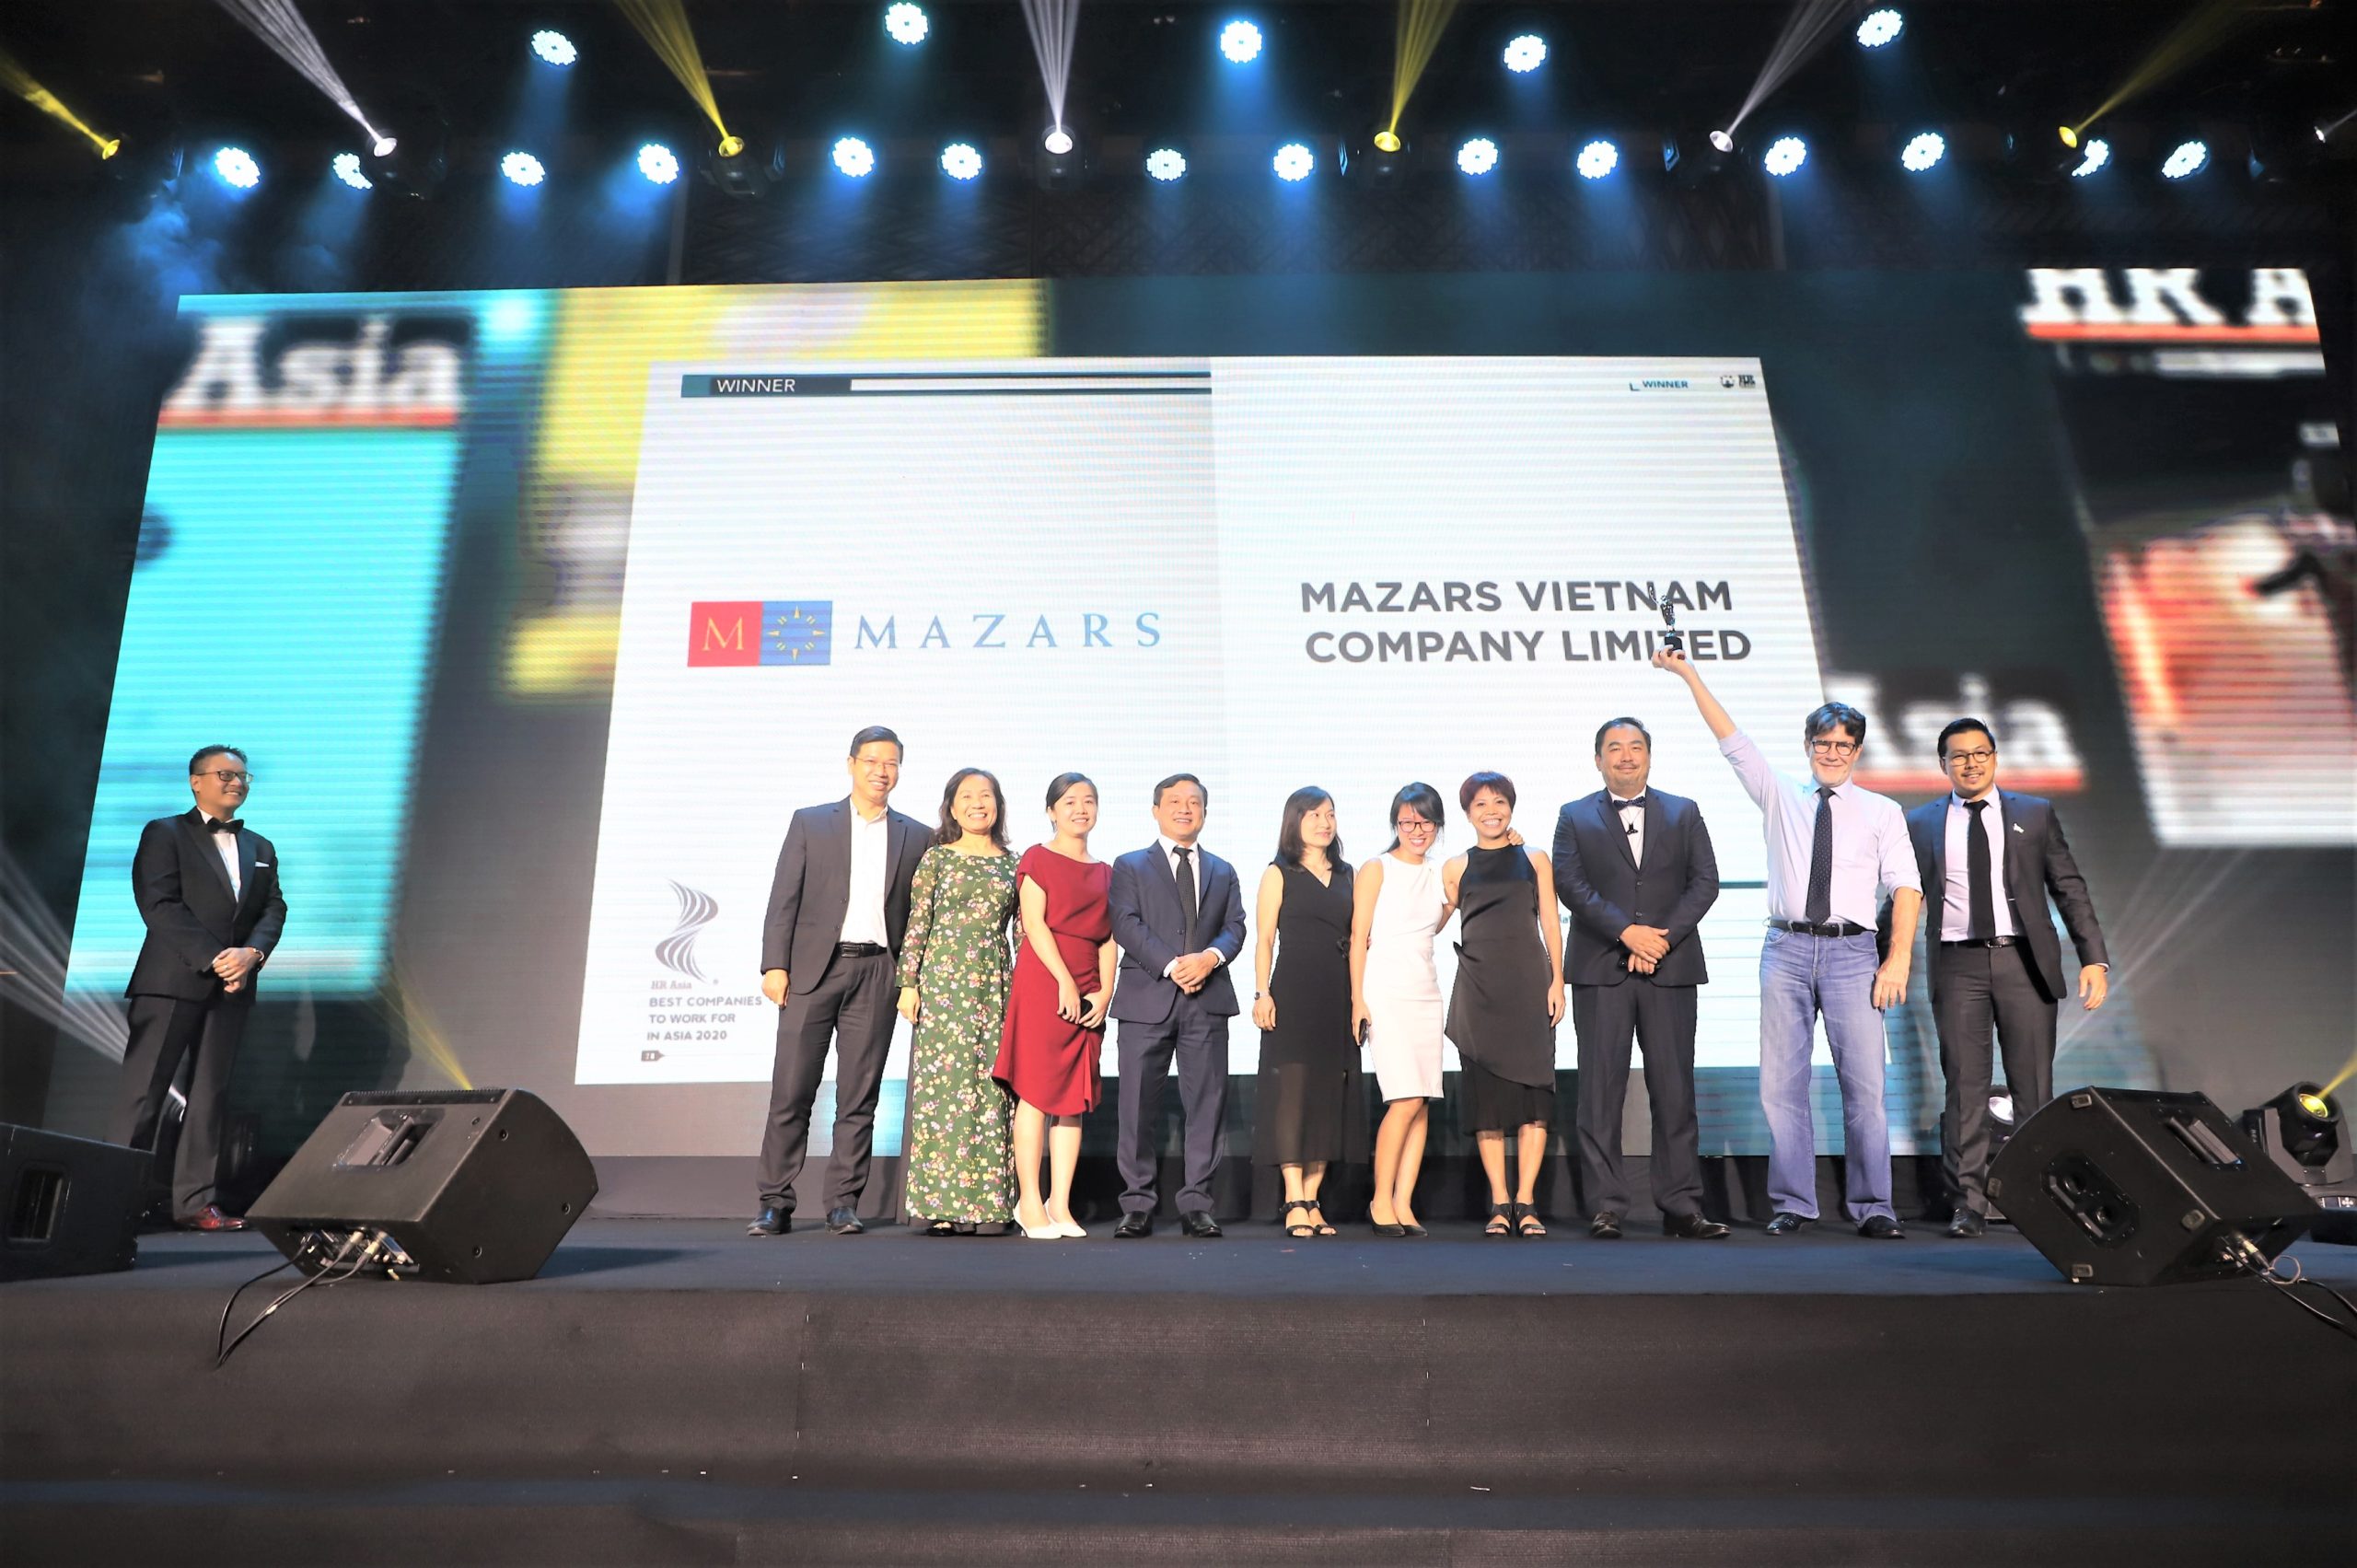 Mazars in Vietnam - Best Companies to Work for in Asia 2020